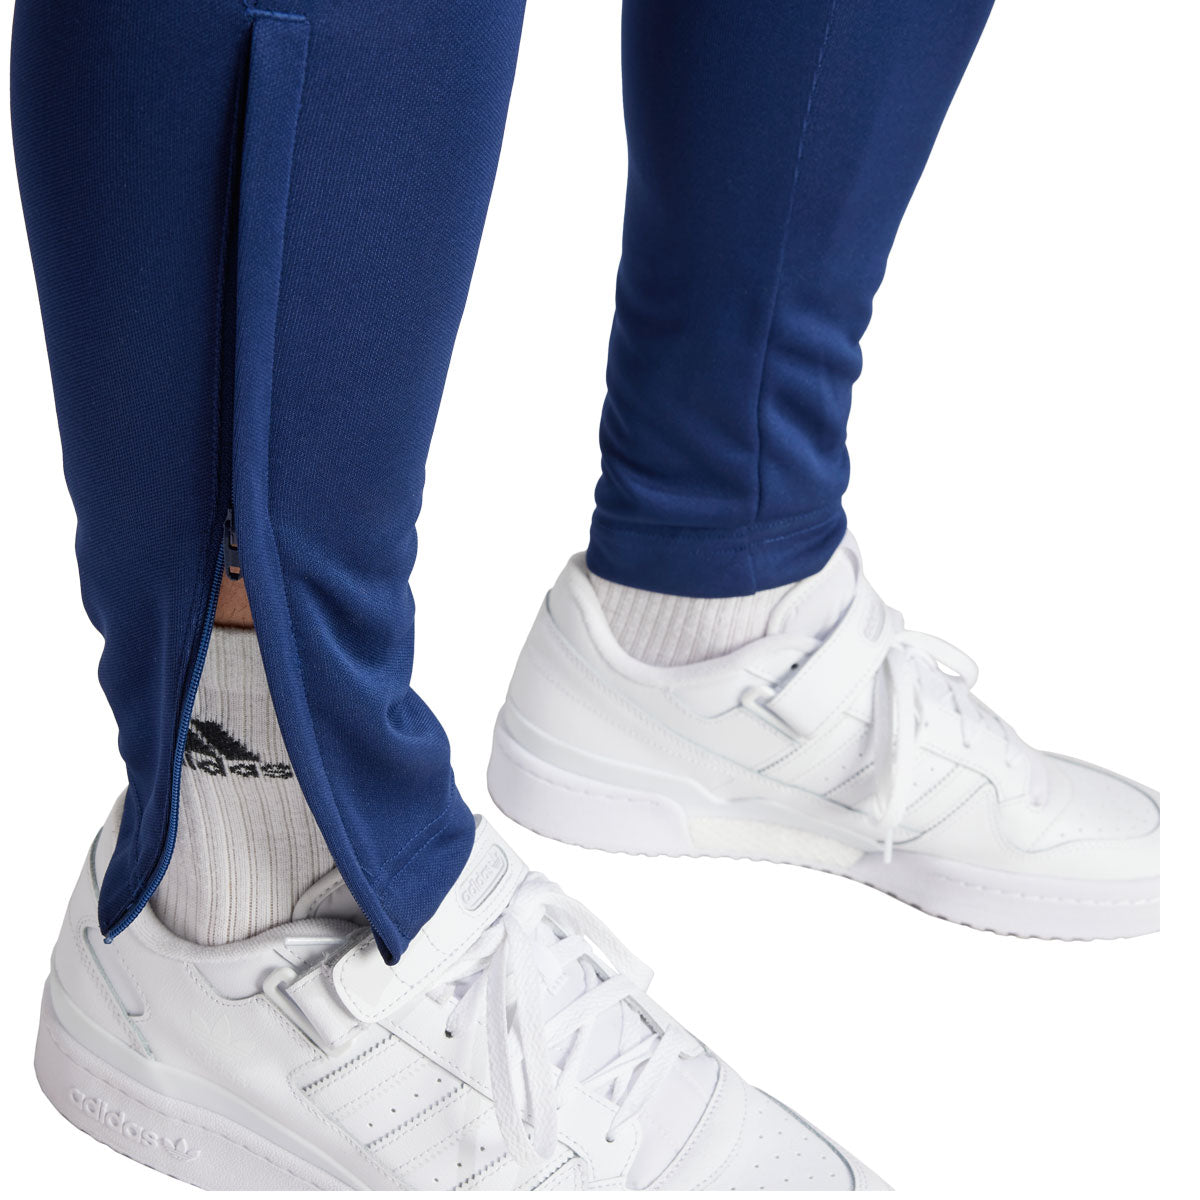 adidas Entrada 22 Training Pants - Adult - Navy Blue